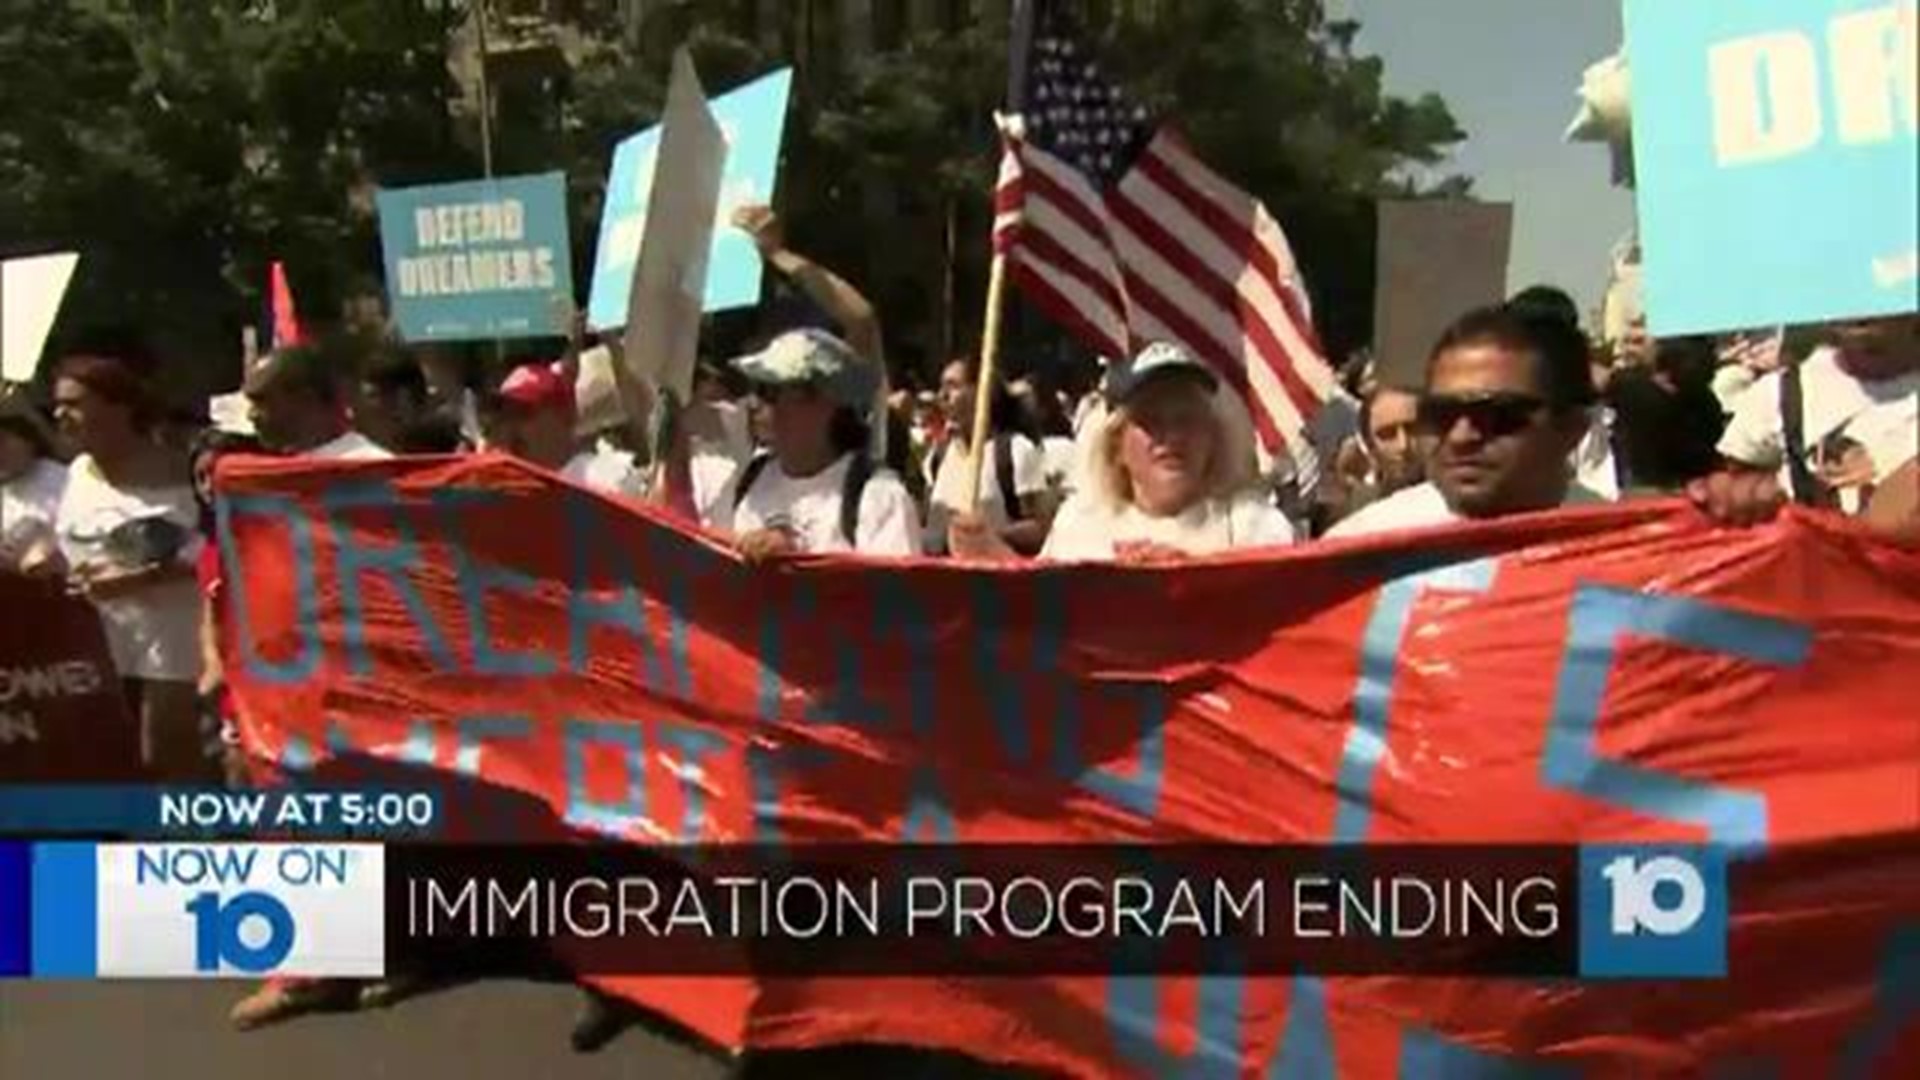 Trump rescinding DACA program protecting young immigrants